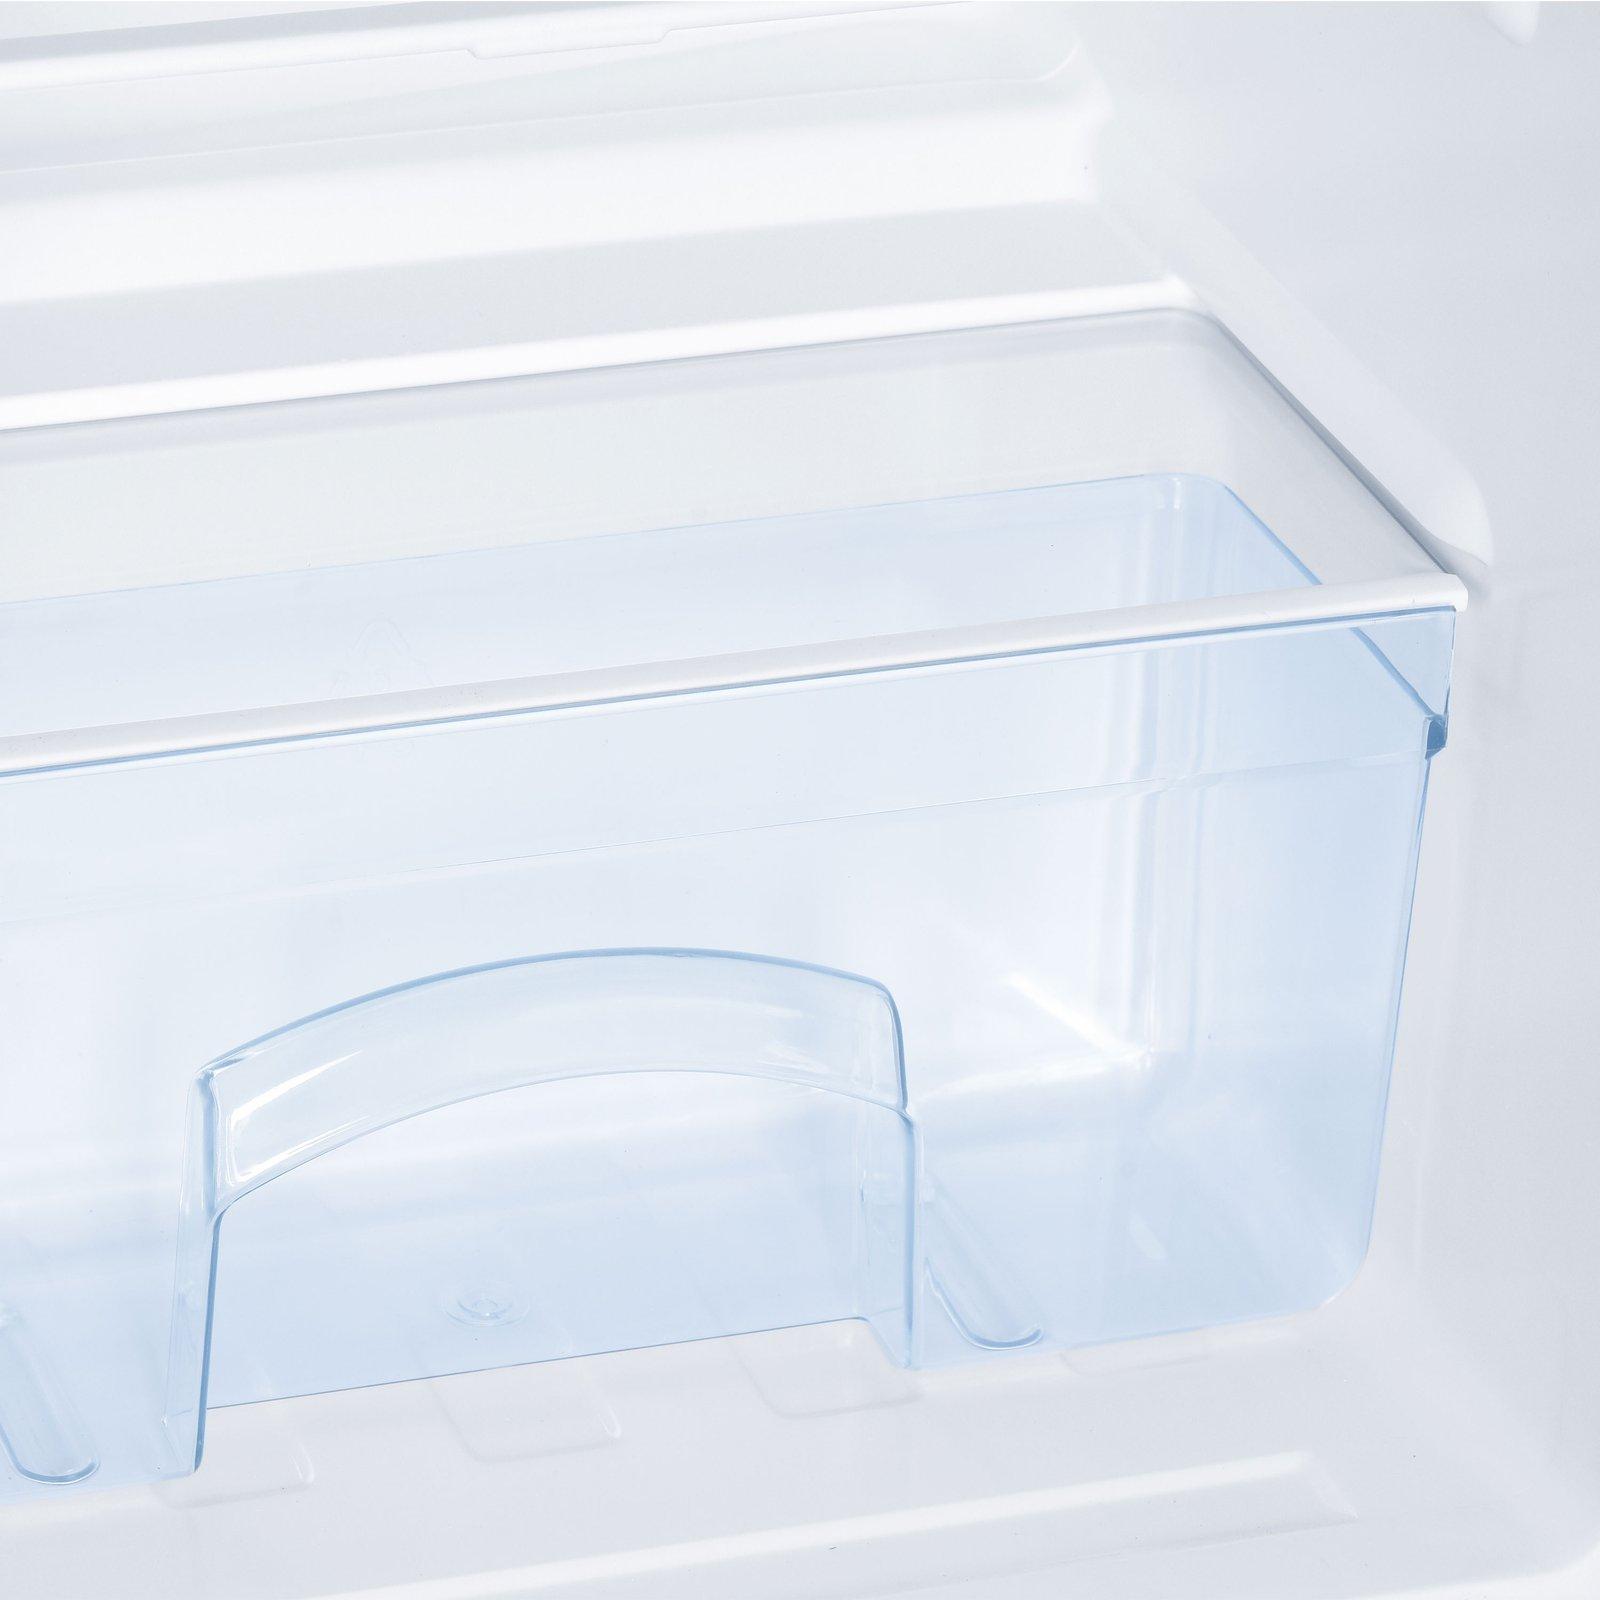 Avanti 3.1 cu. ft. Compact Refrigerator - Stainless Steel / 3.1 cu. ft.